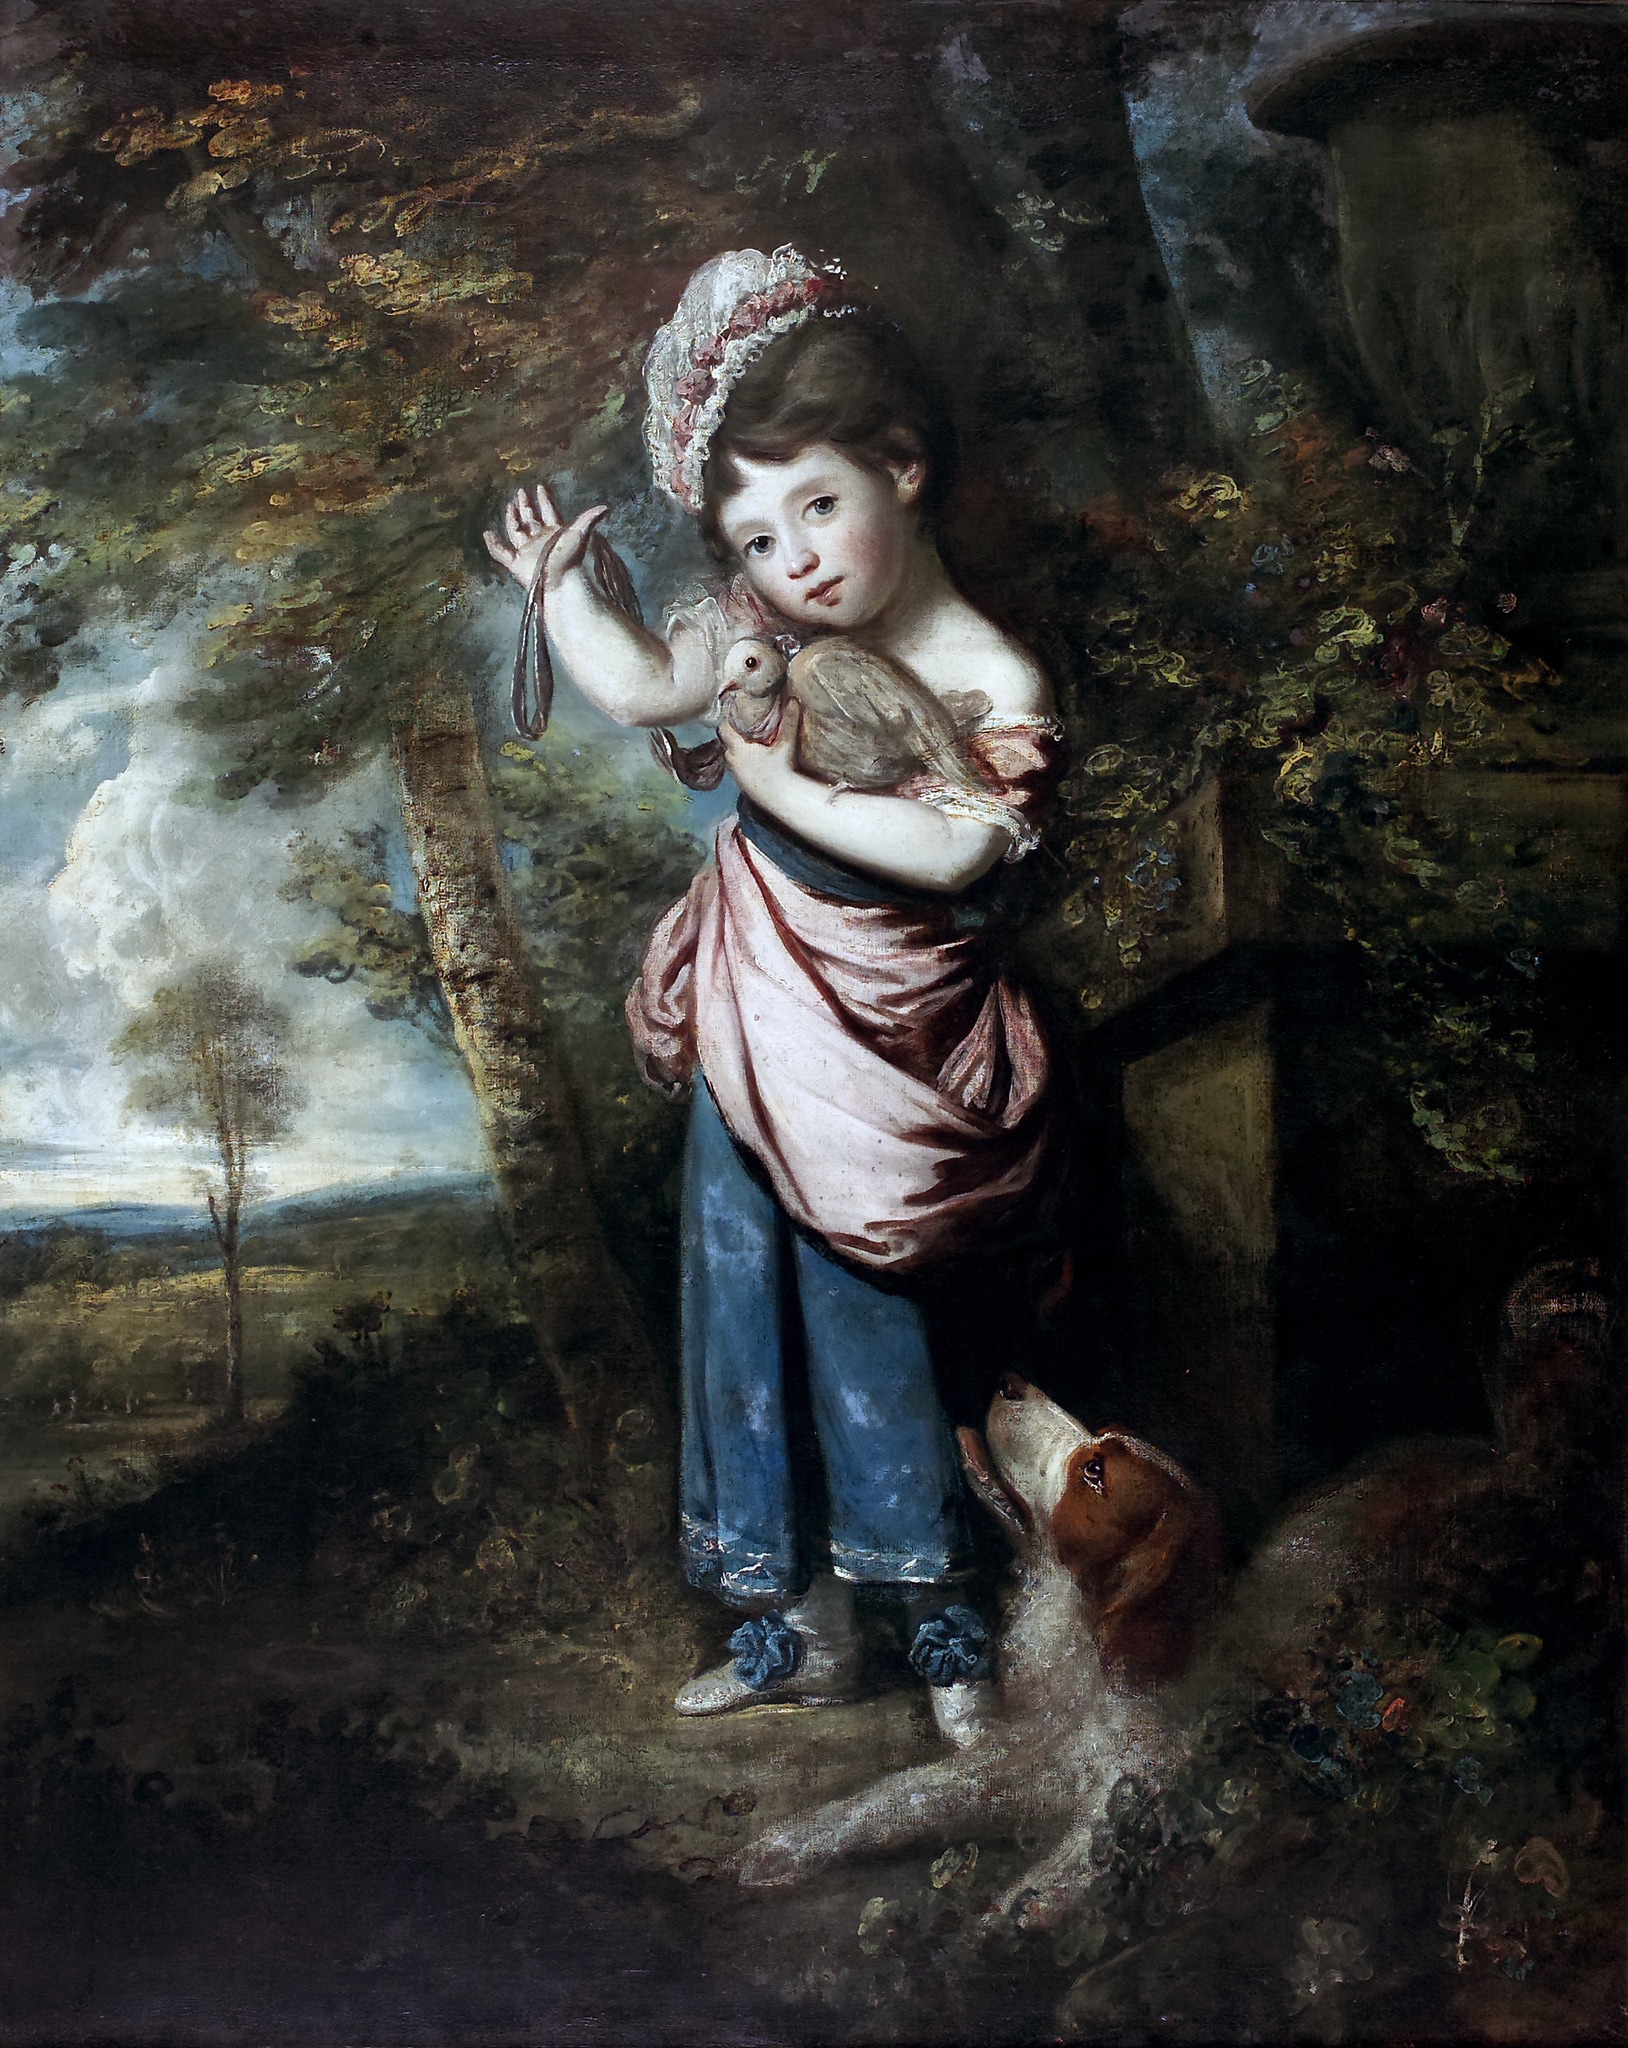 Joshua Reynolds (Plympton 1723 - Londra 1792) "Catherine Bishop", 1757. Olio su tela, 127 x 101,6 cm 